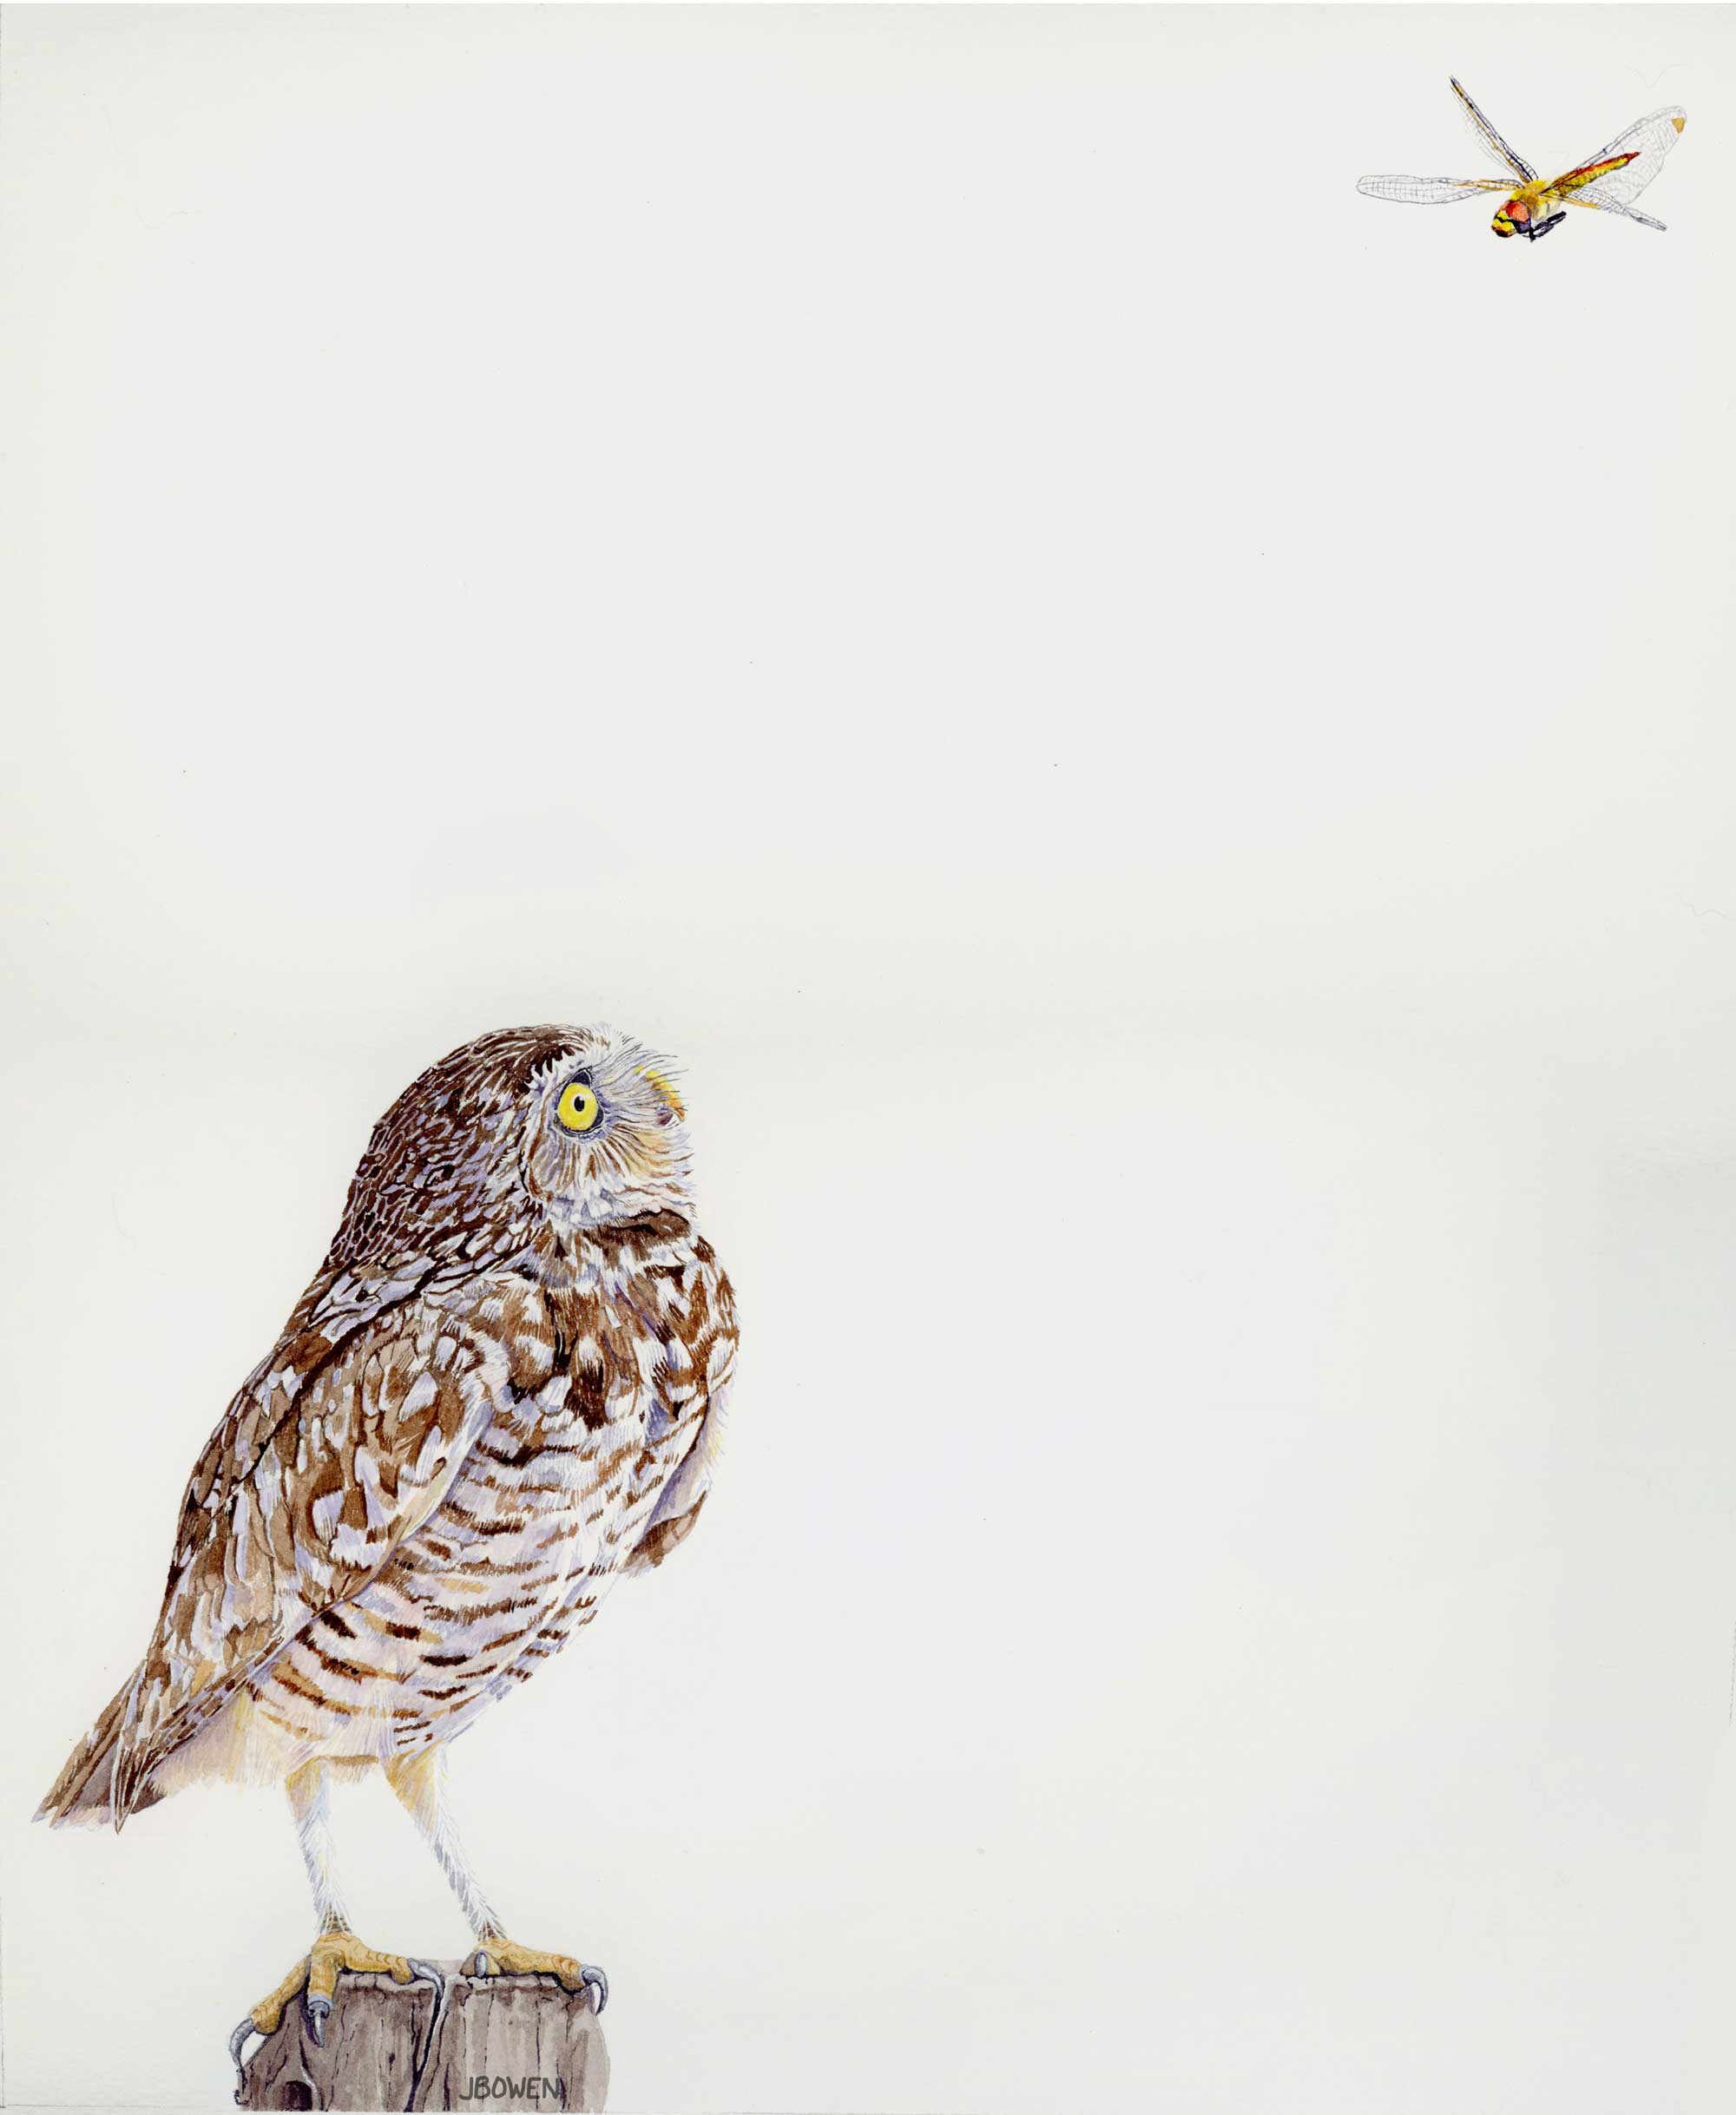 “Eye on the Prize – Burrowing Owl”